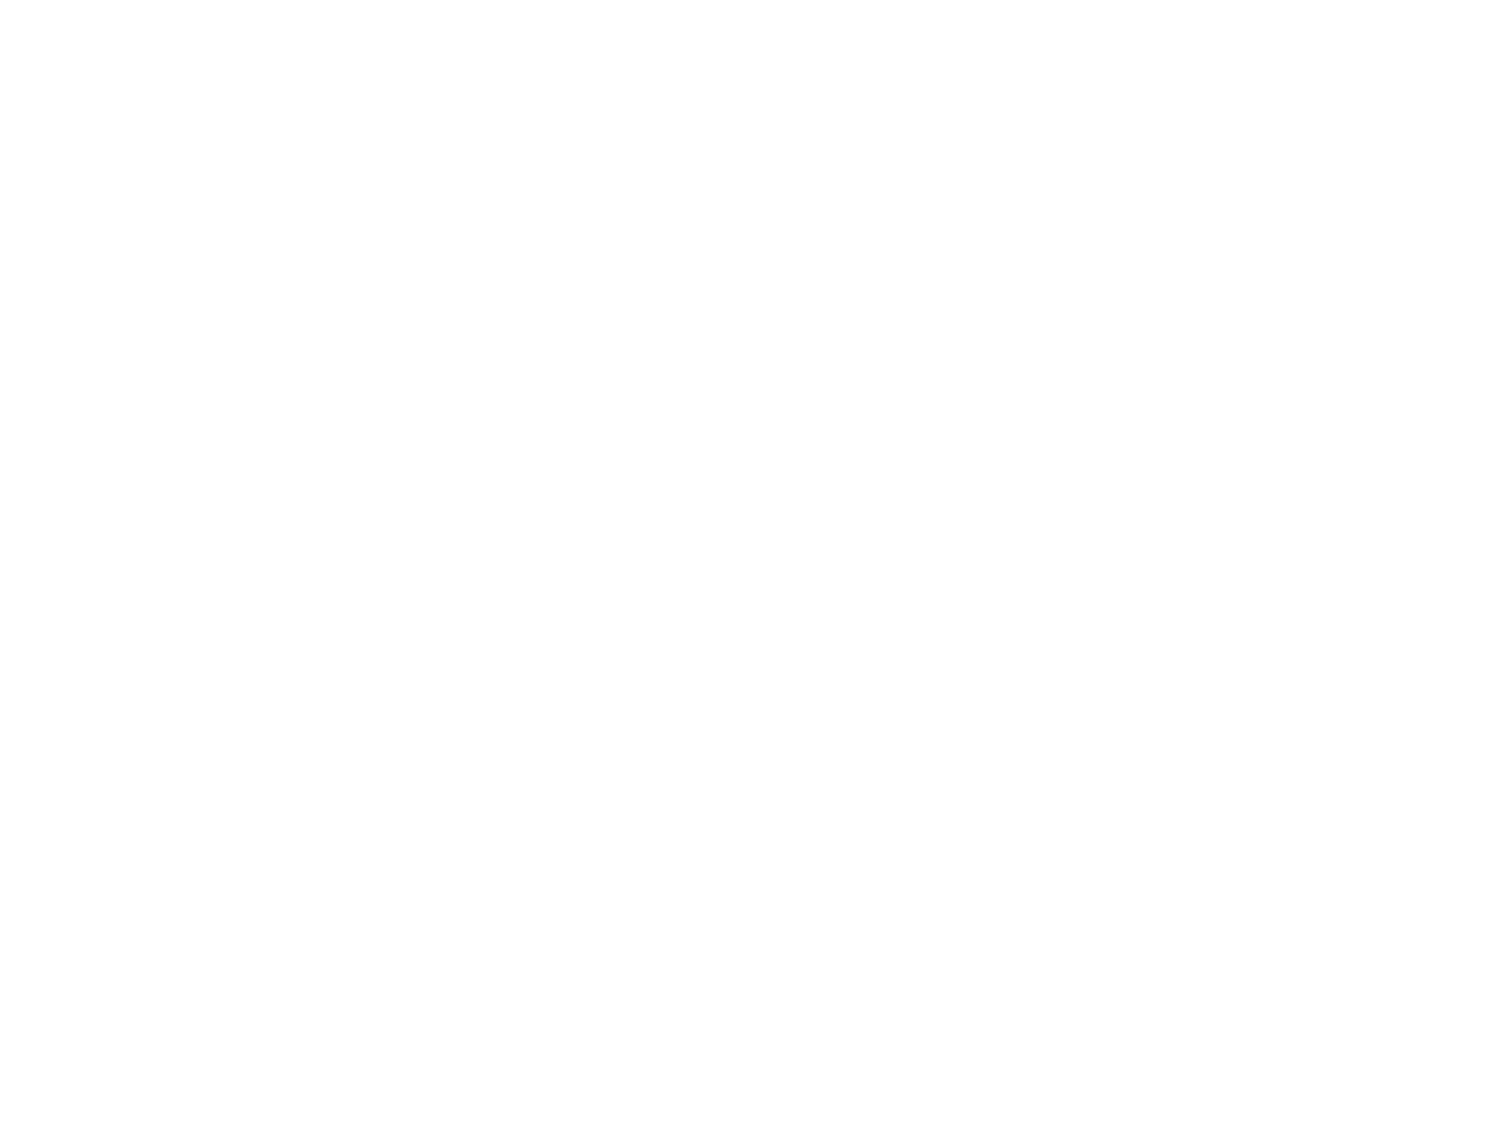 Aberdeen Limited